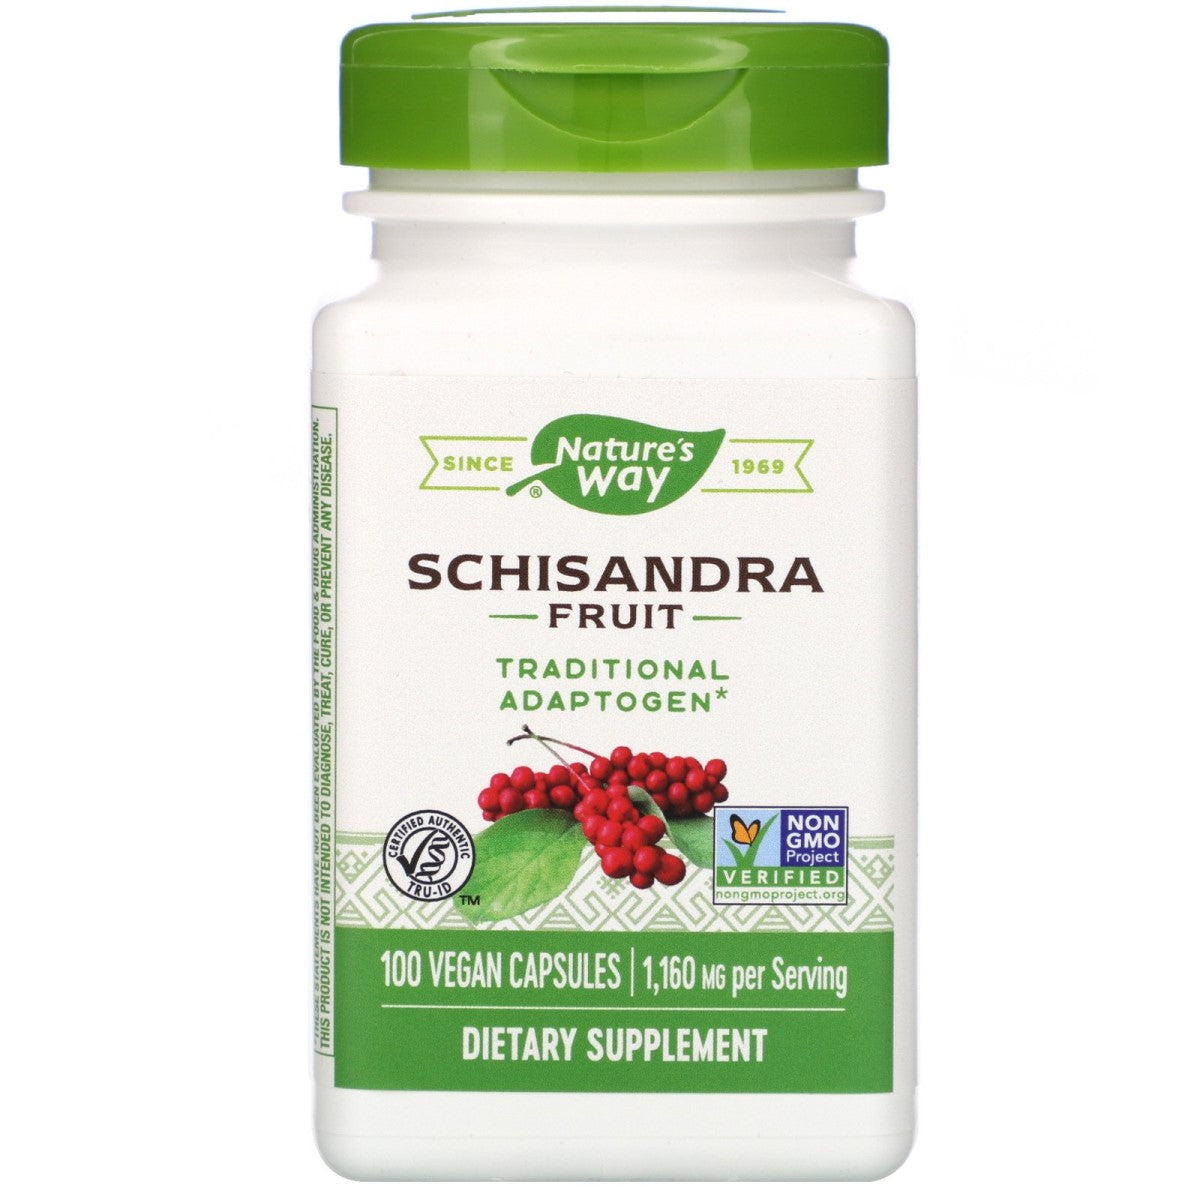 Primary image of Schisandra Fruit